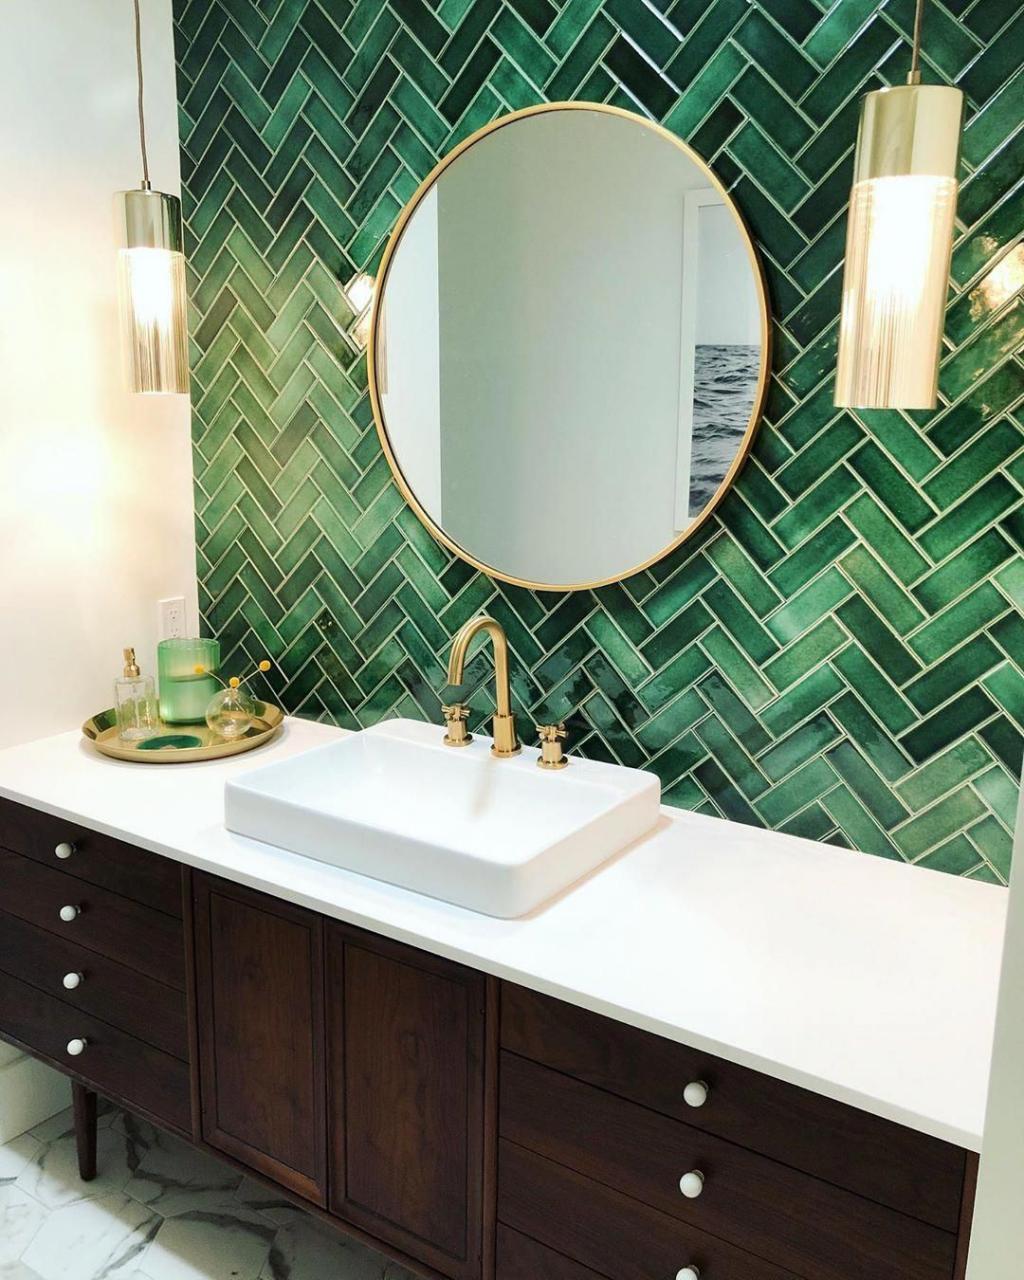 Bathroom goals. 💚🙌🏼Custom imported tile backsplash in beautiful emerald